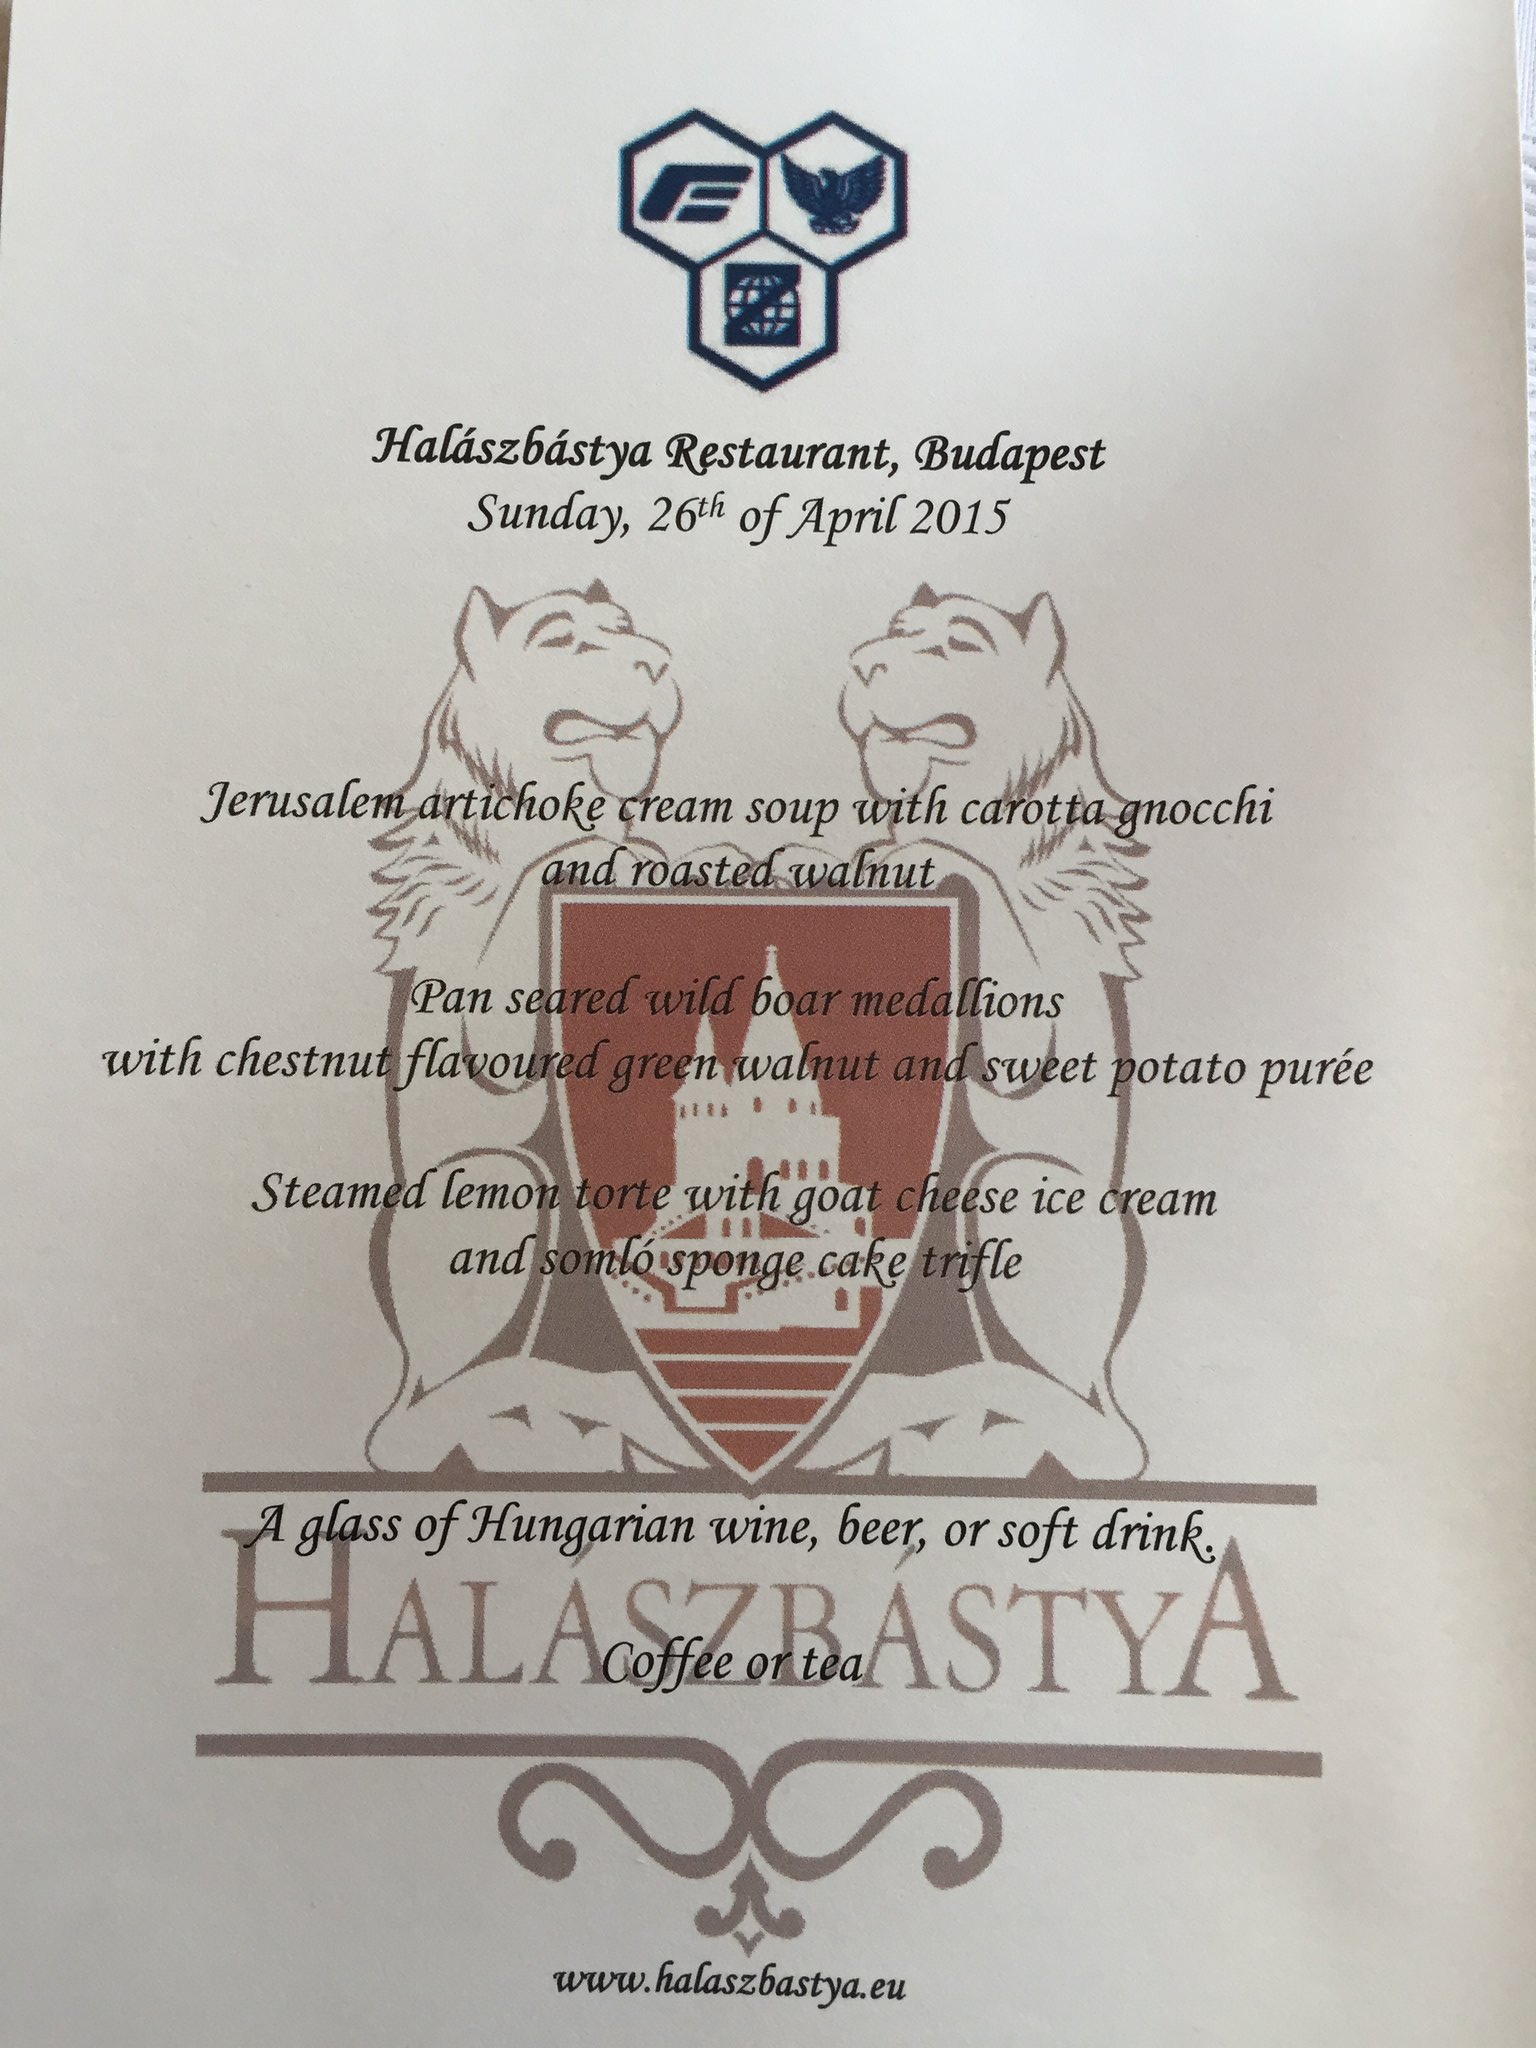 Halaszbastya dinner menu April 26, 2015 265